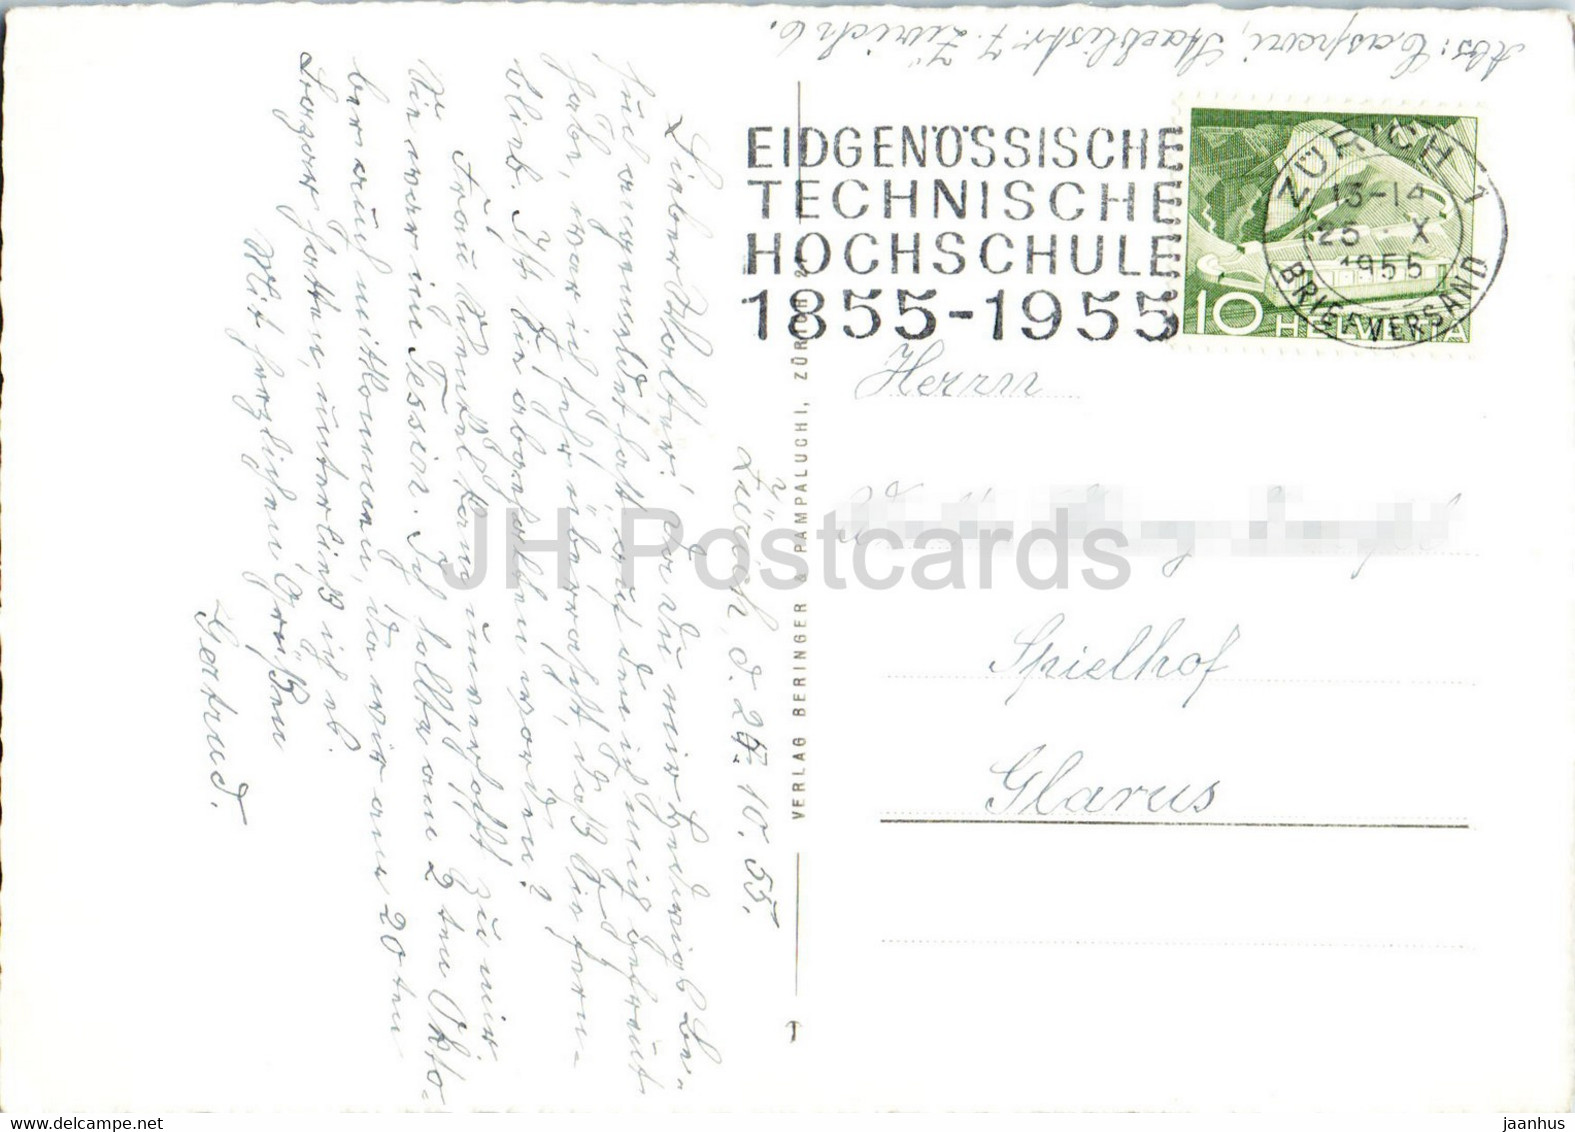 Zurich - Hans Waldmann Denkmal - Grossmunster - Monument - Horse - Cathedral - 1955 - Old Postcard - Switzerland - Used - Wald